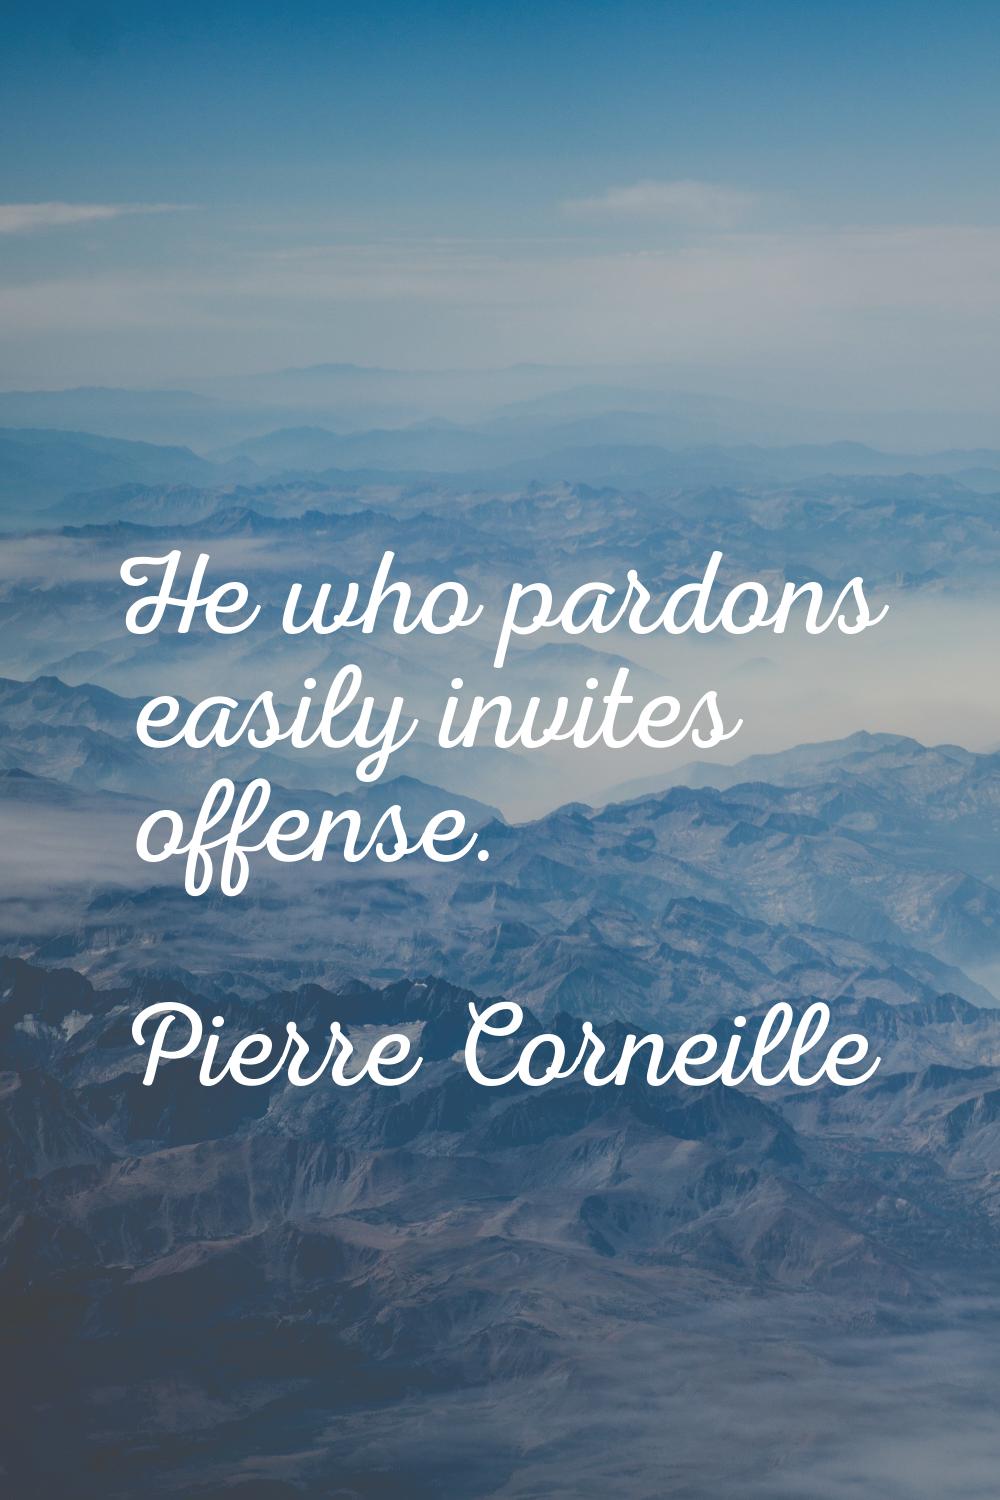 He who pardons easily invites offense.